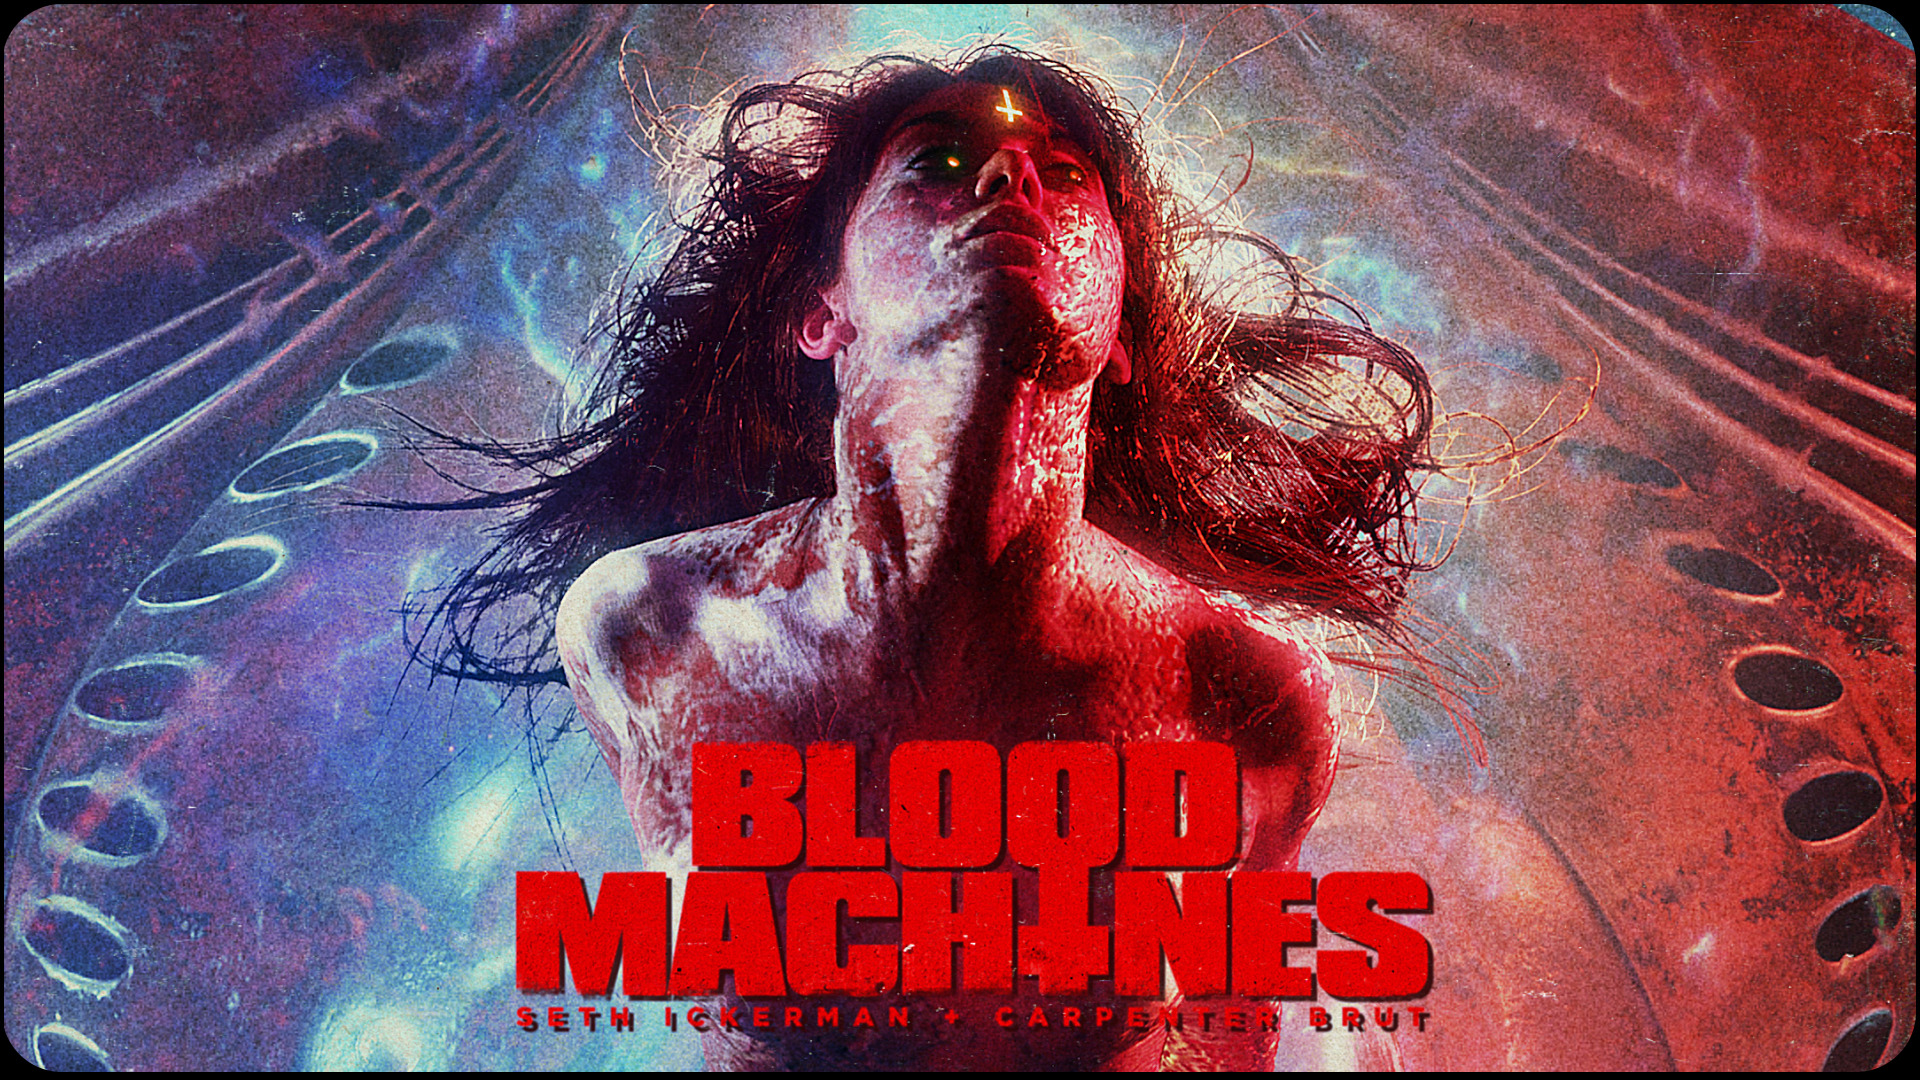 Show Blood Machines